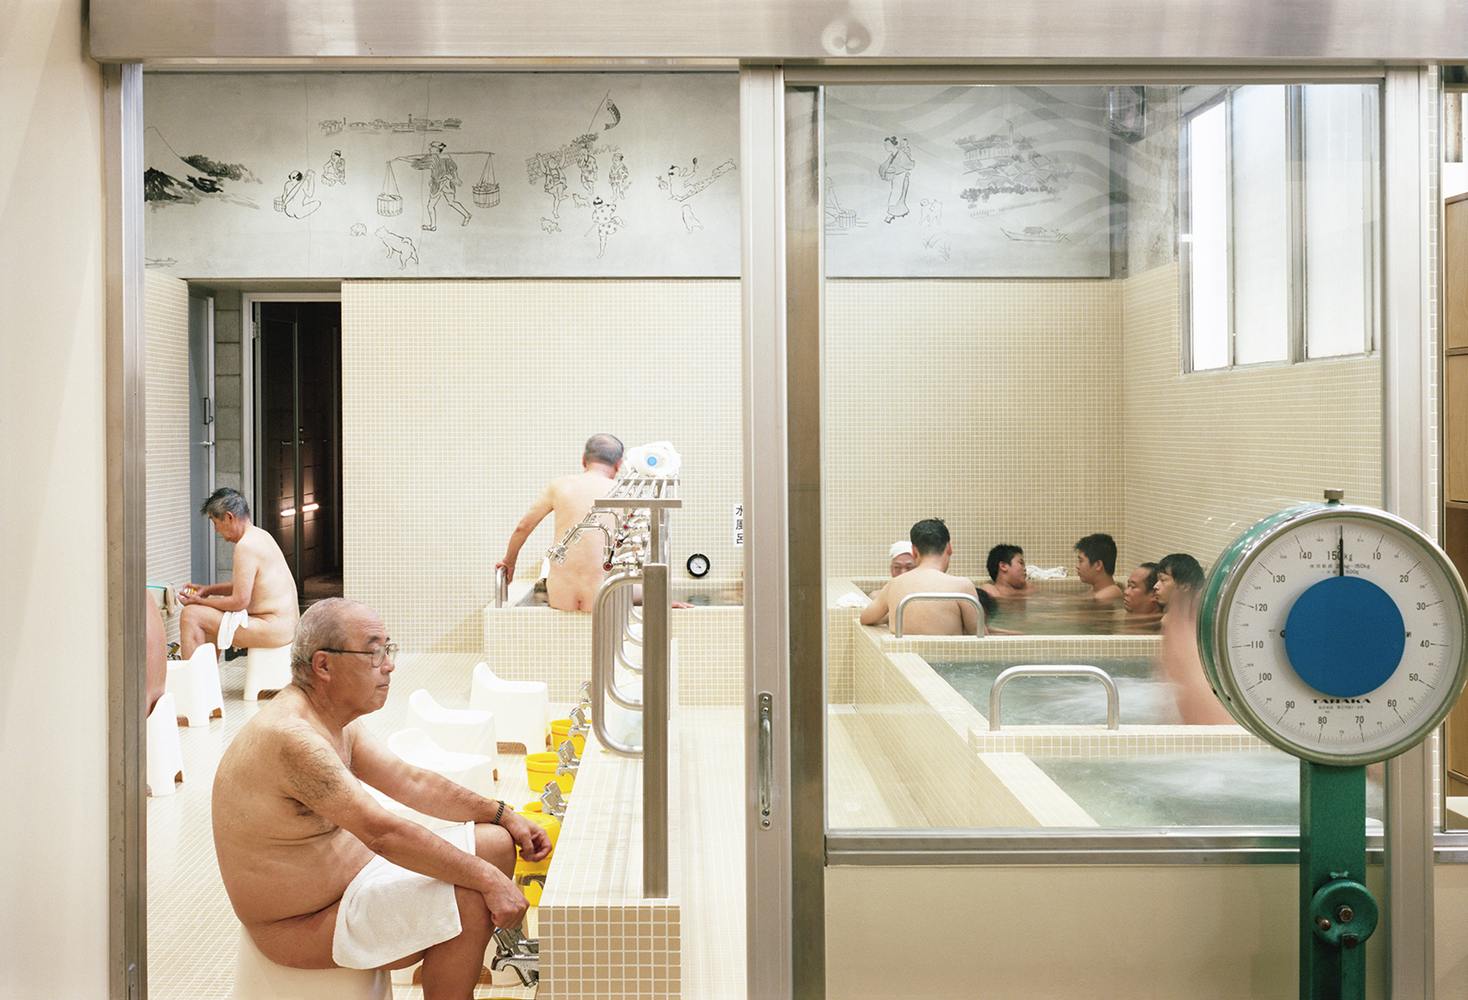 The men's bath at Koganeyu Sento Public Bathouse in Sumida, Tokyo | Photo by Yurika Kono